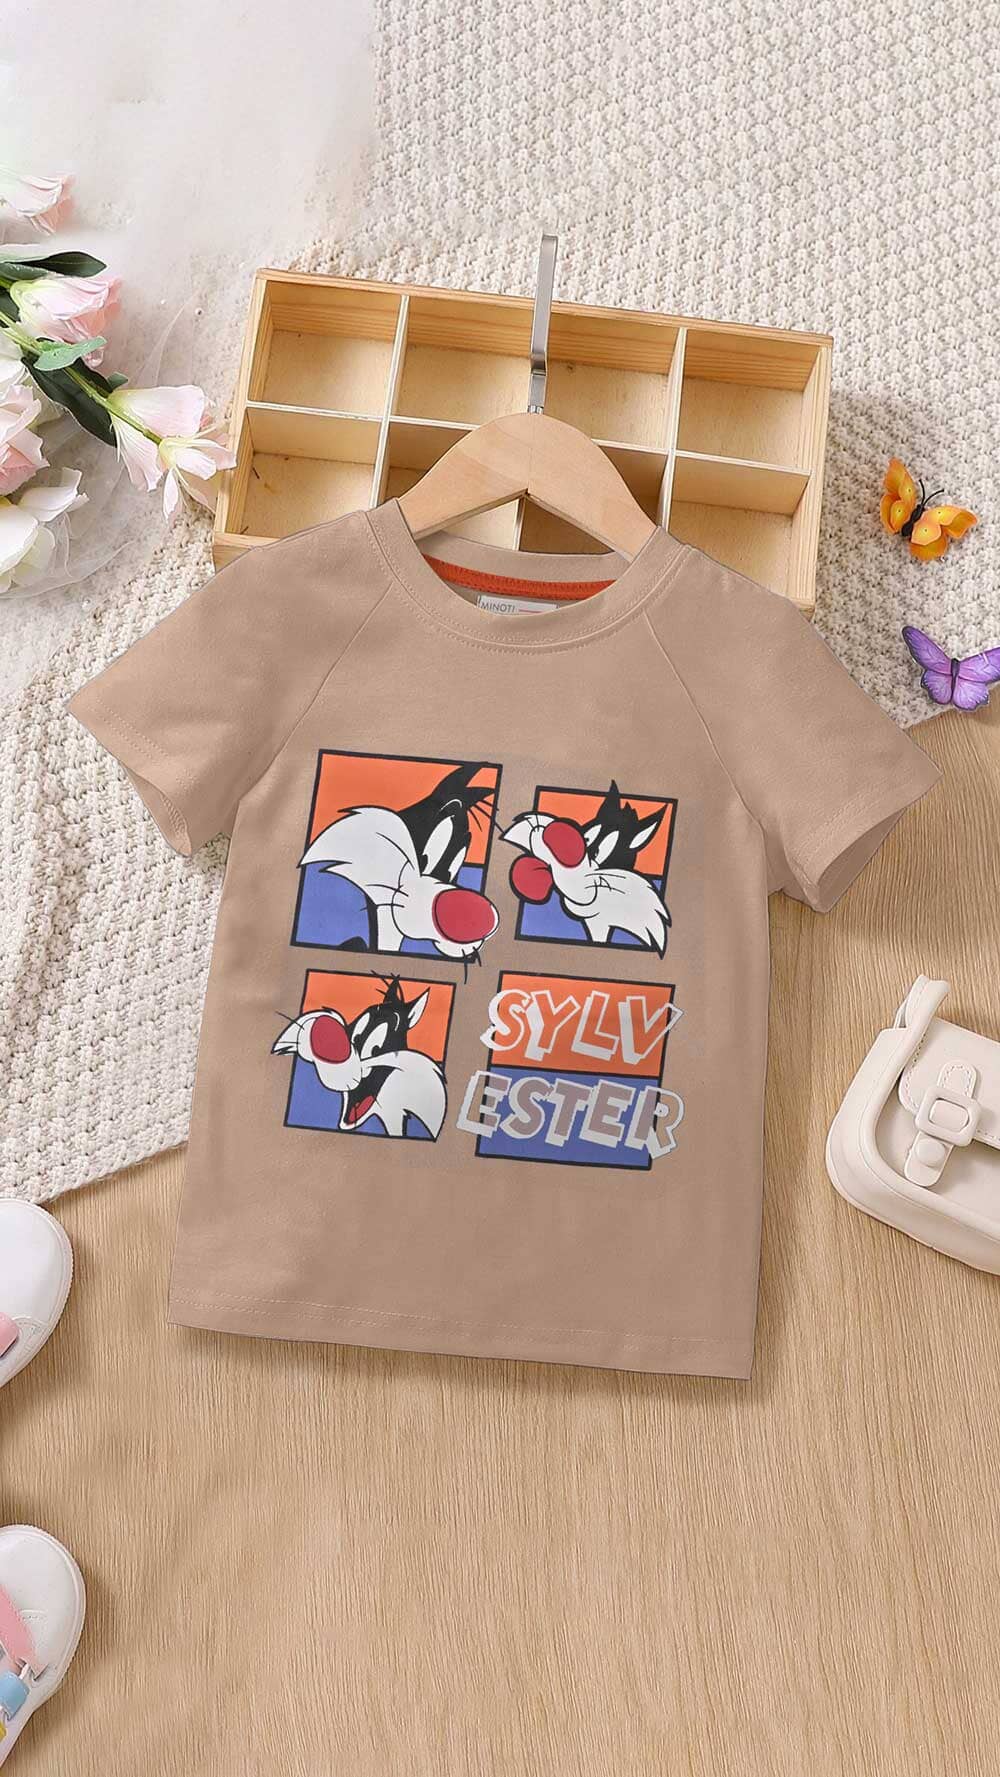 Minoti Kid's Sylv Ester Printed Tee Shirt Boy's Tee Shirt SZK 